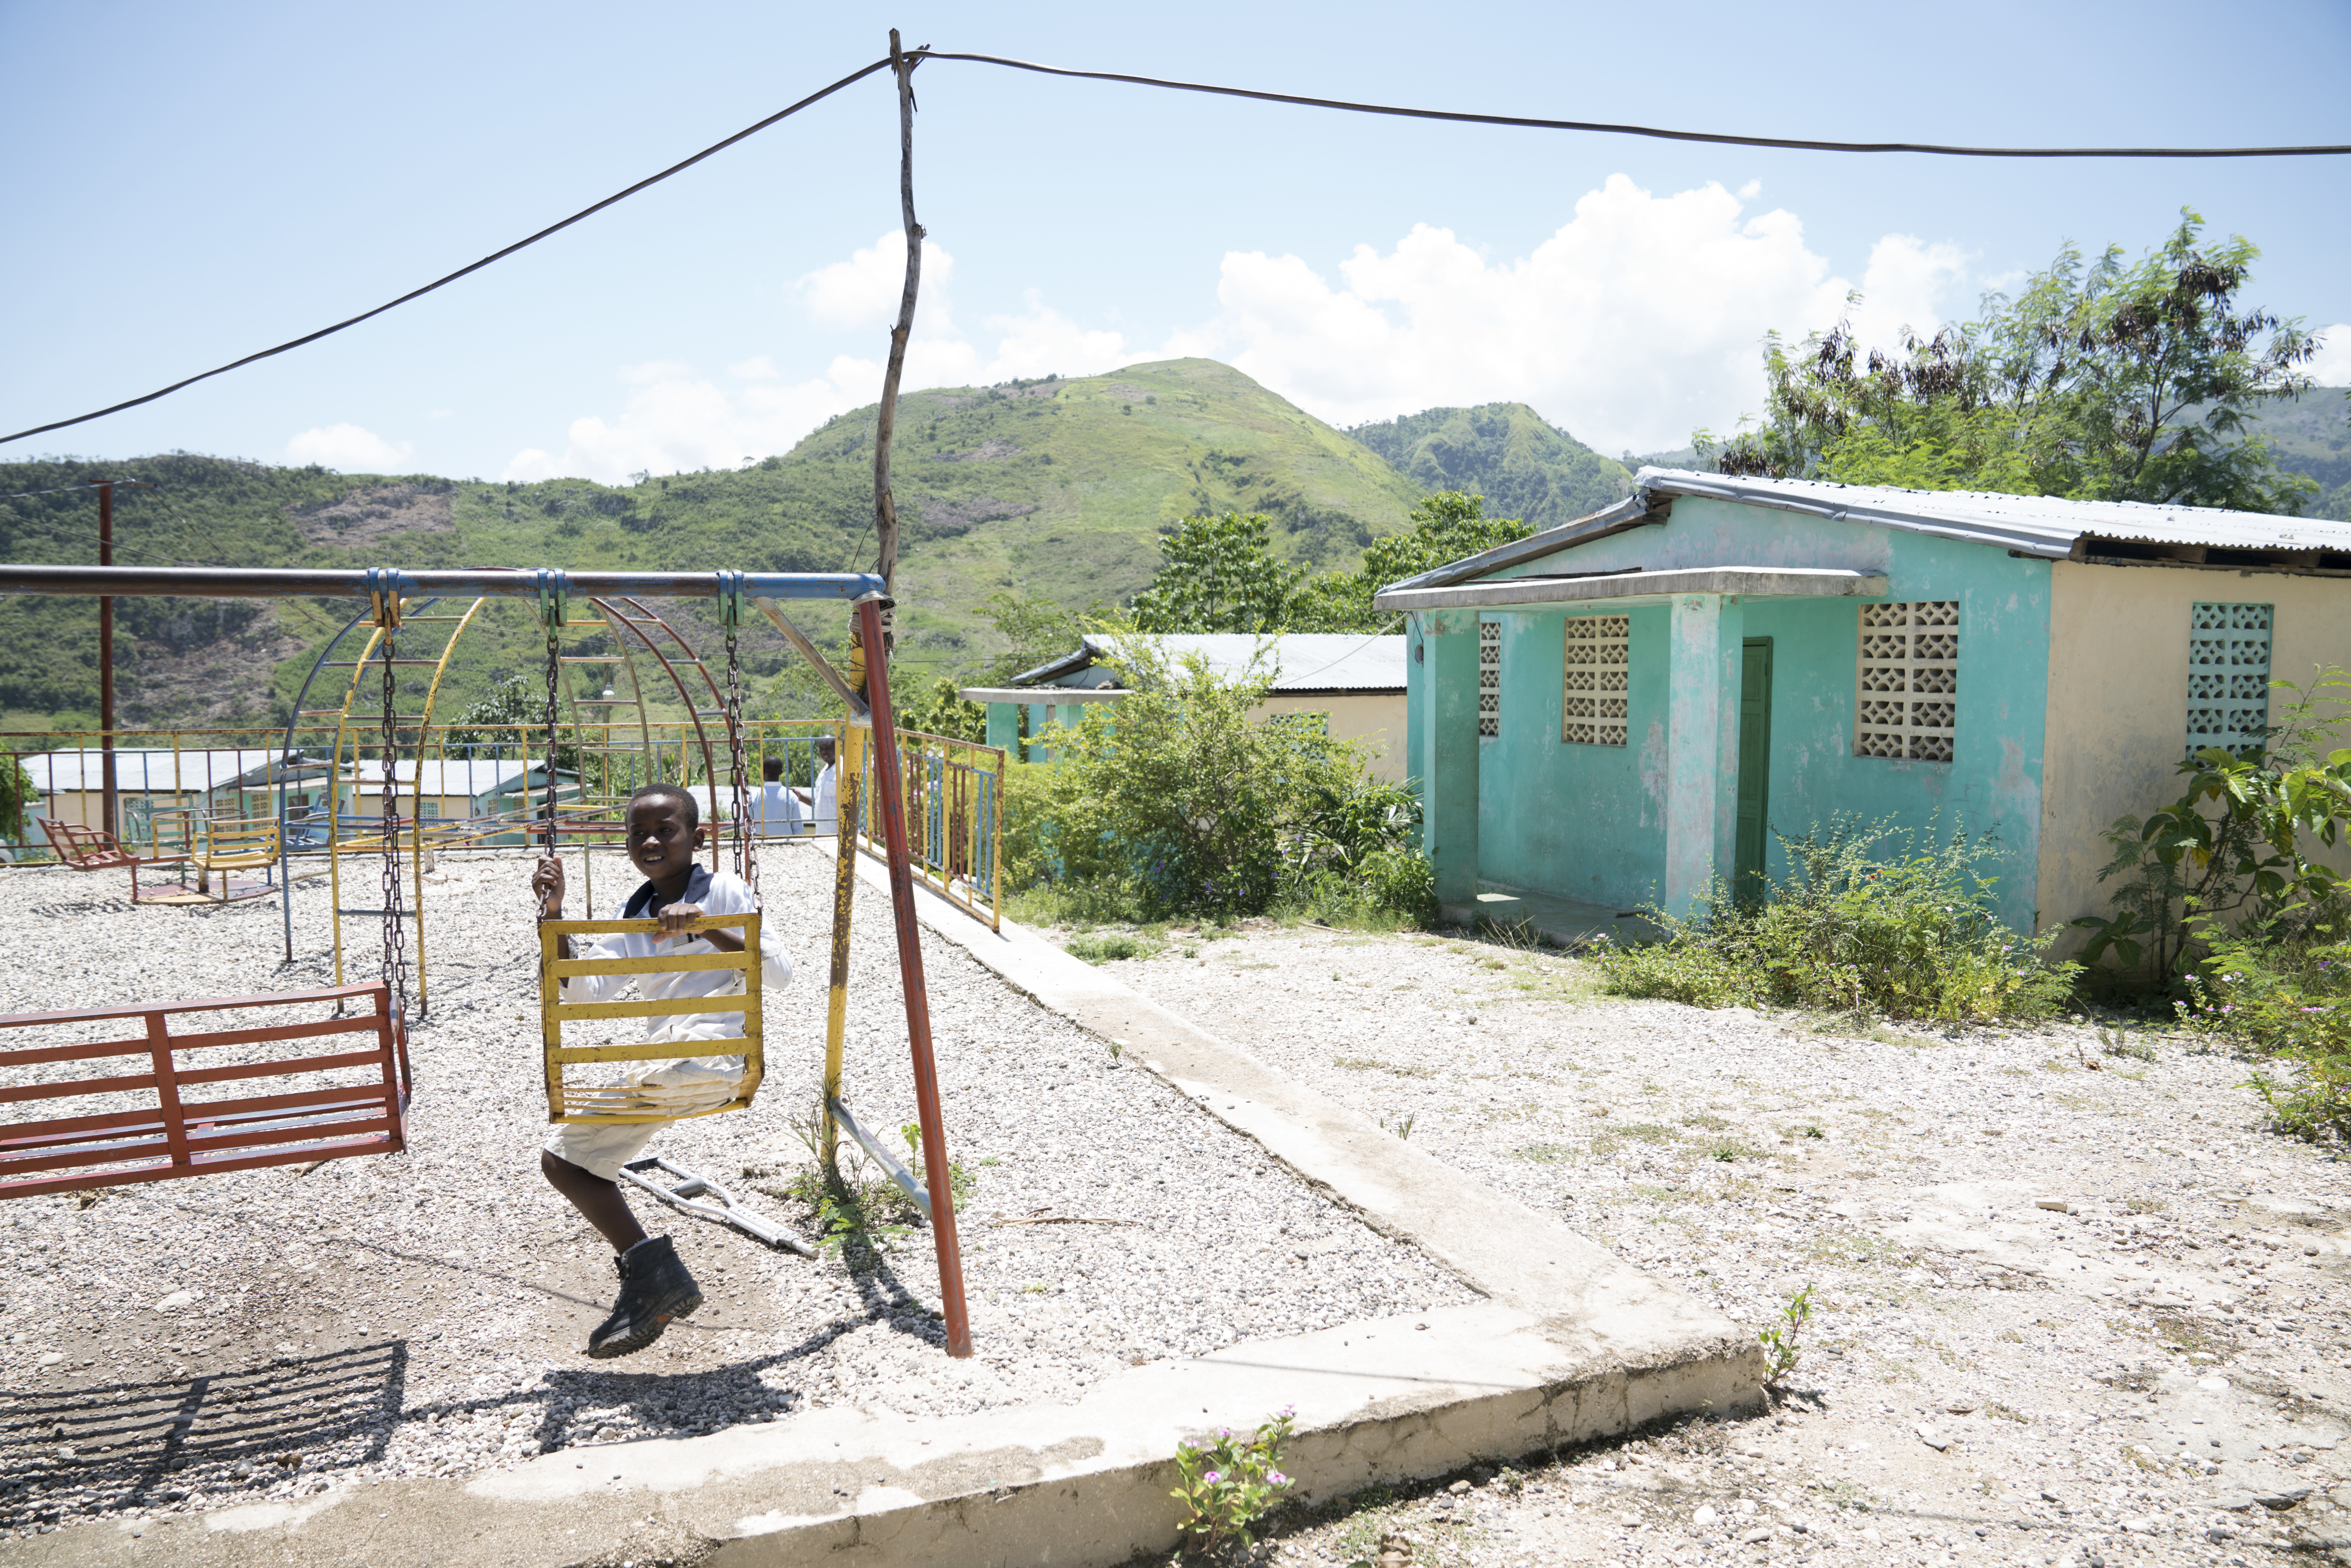 House in Haiti